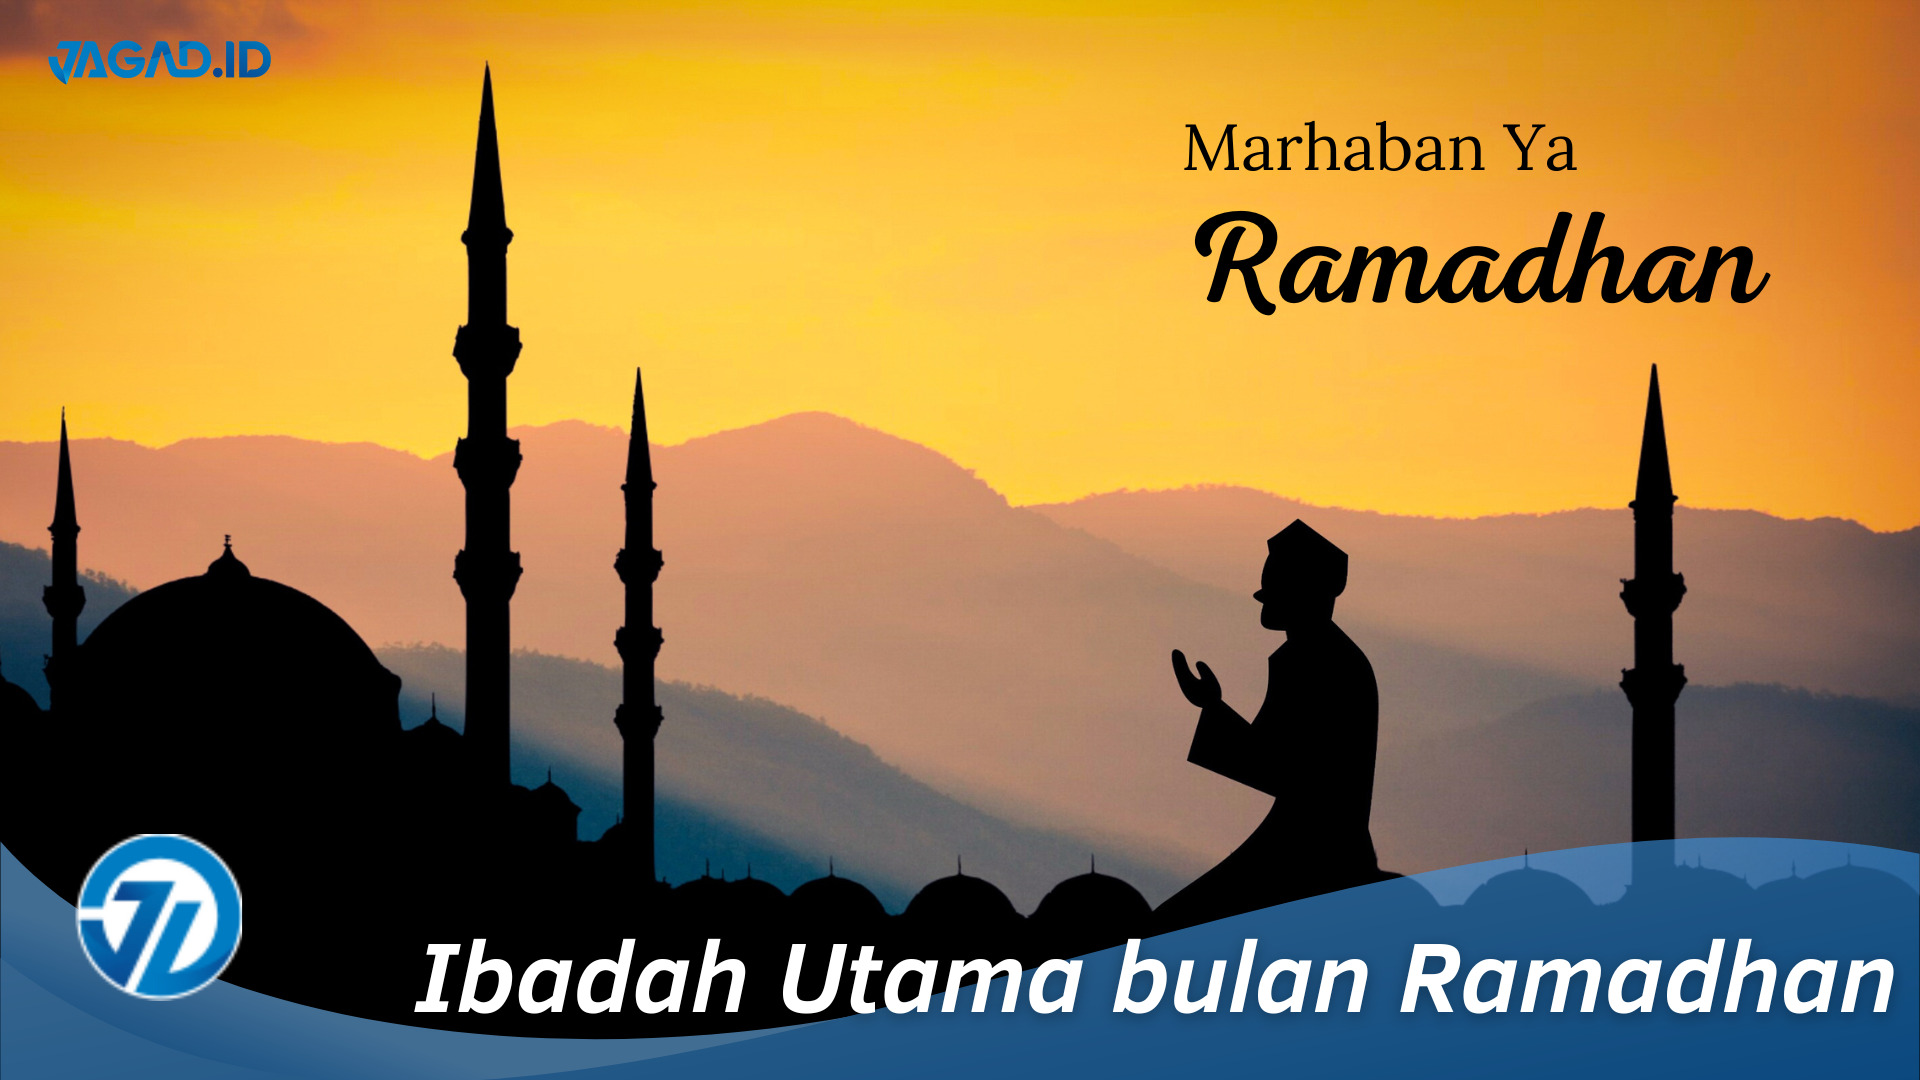 Ibadah Utama bulan Ramadhan